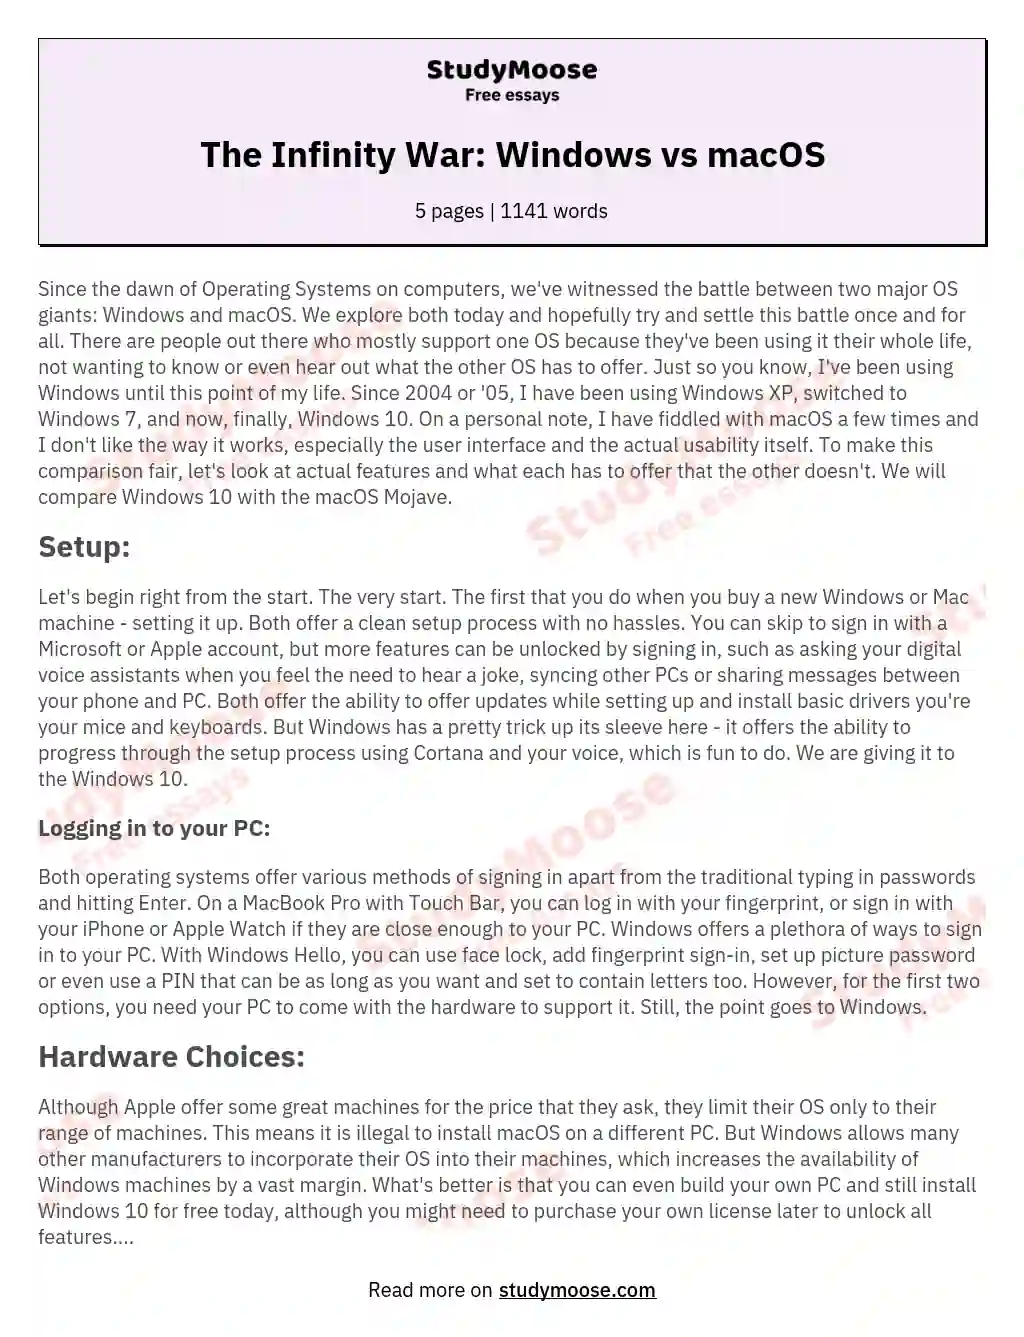 The Infinity War: Windows vs macOS essay